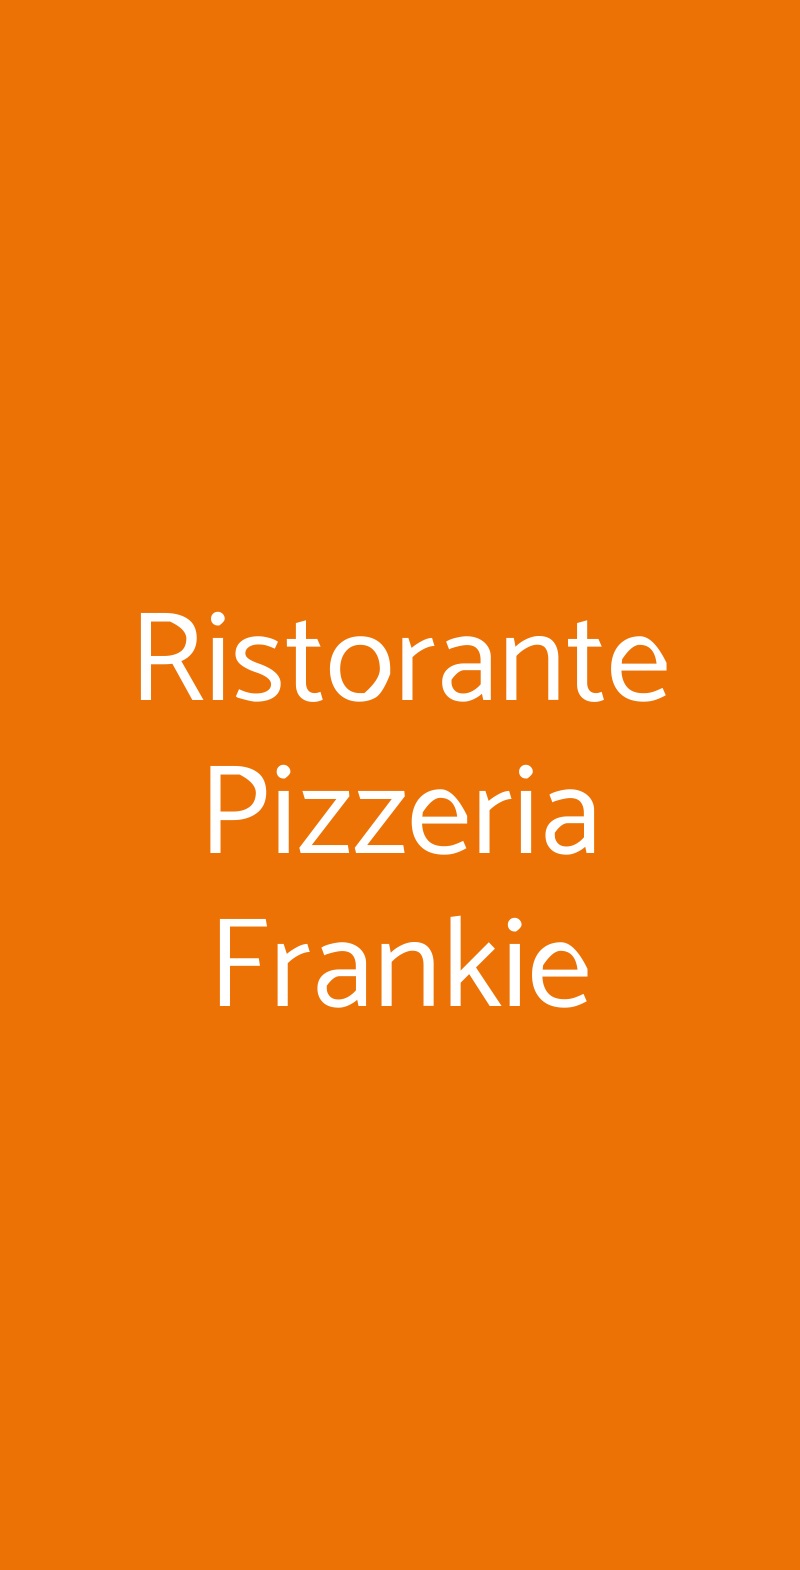 Ristorante Pizzeria Frankie Rimini menù 1 pagina